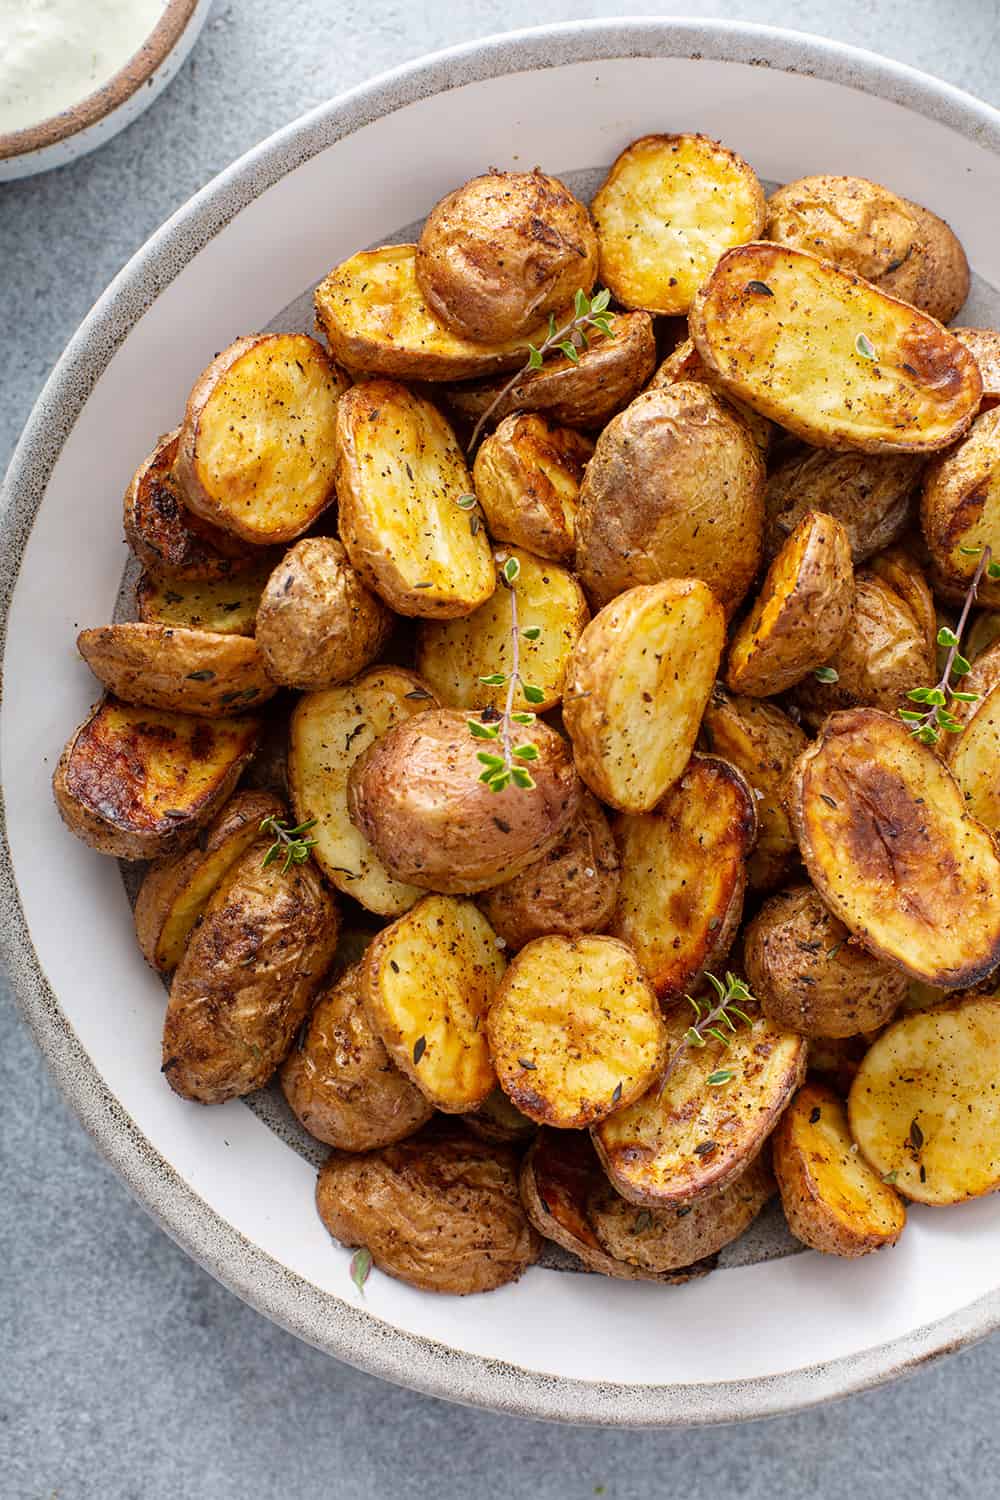 https://www.mybakingaddiction.com/wp-content/uploads/2021/06/close-up-air-fryer-roasted-potatoes.jpg